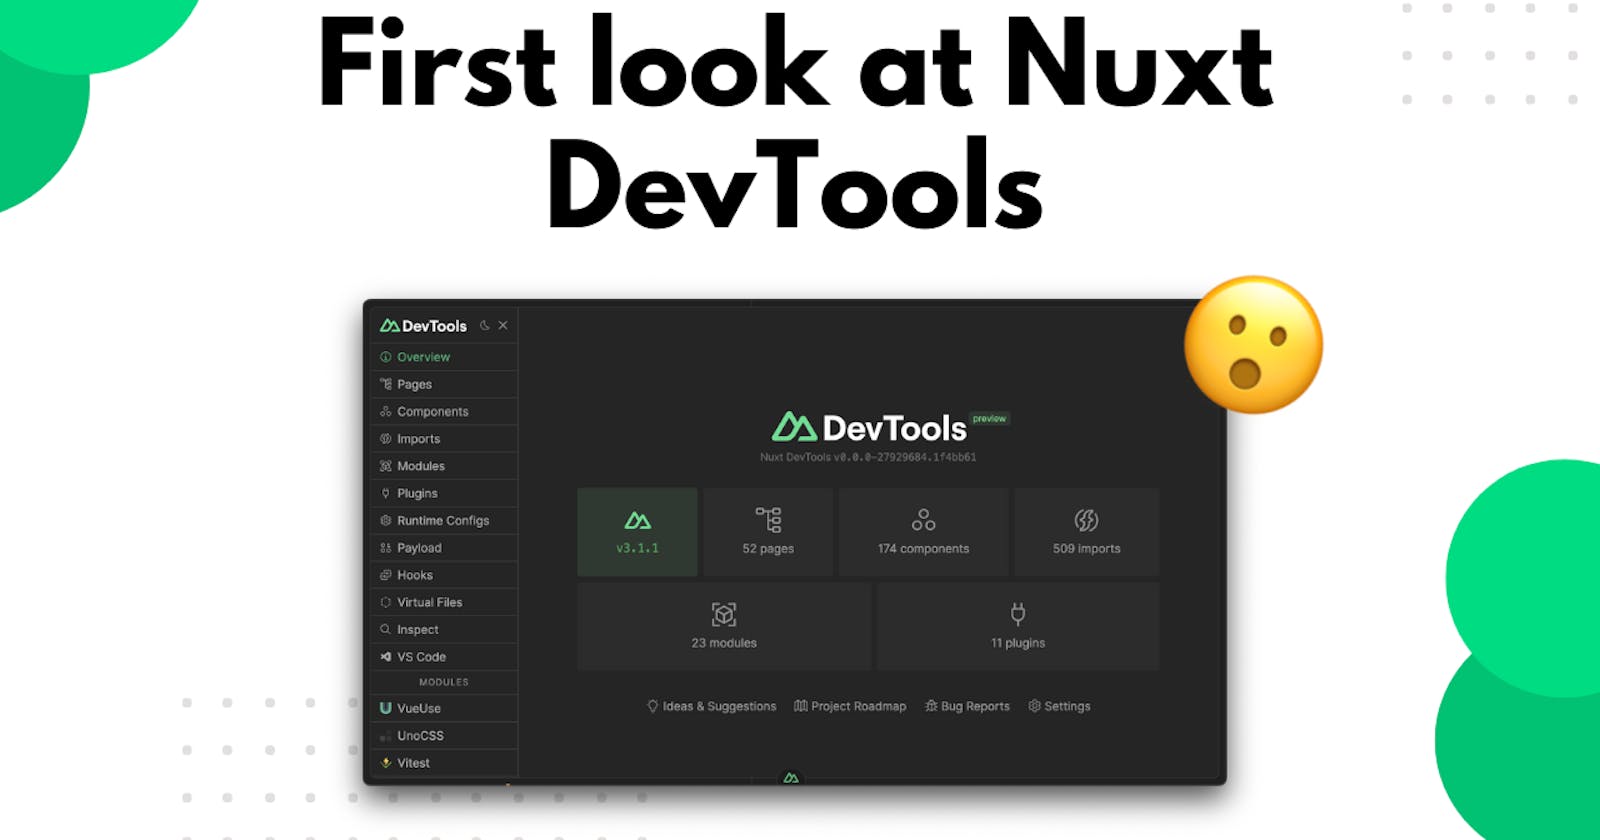 First look at Nuxt DevTools